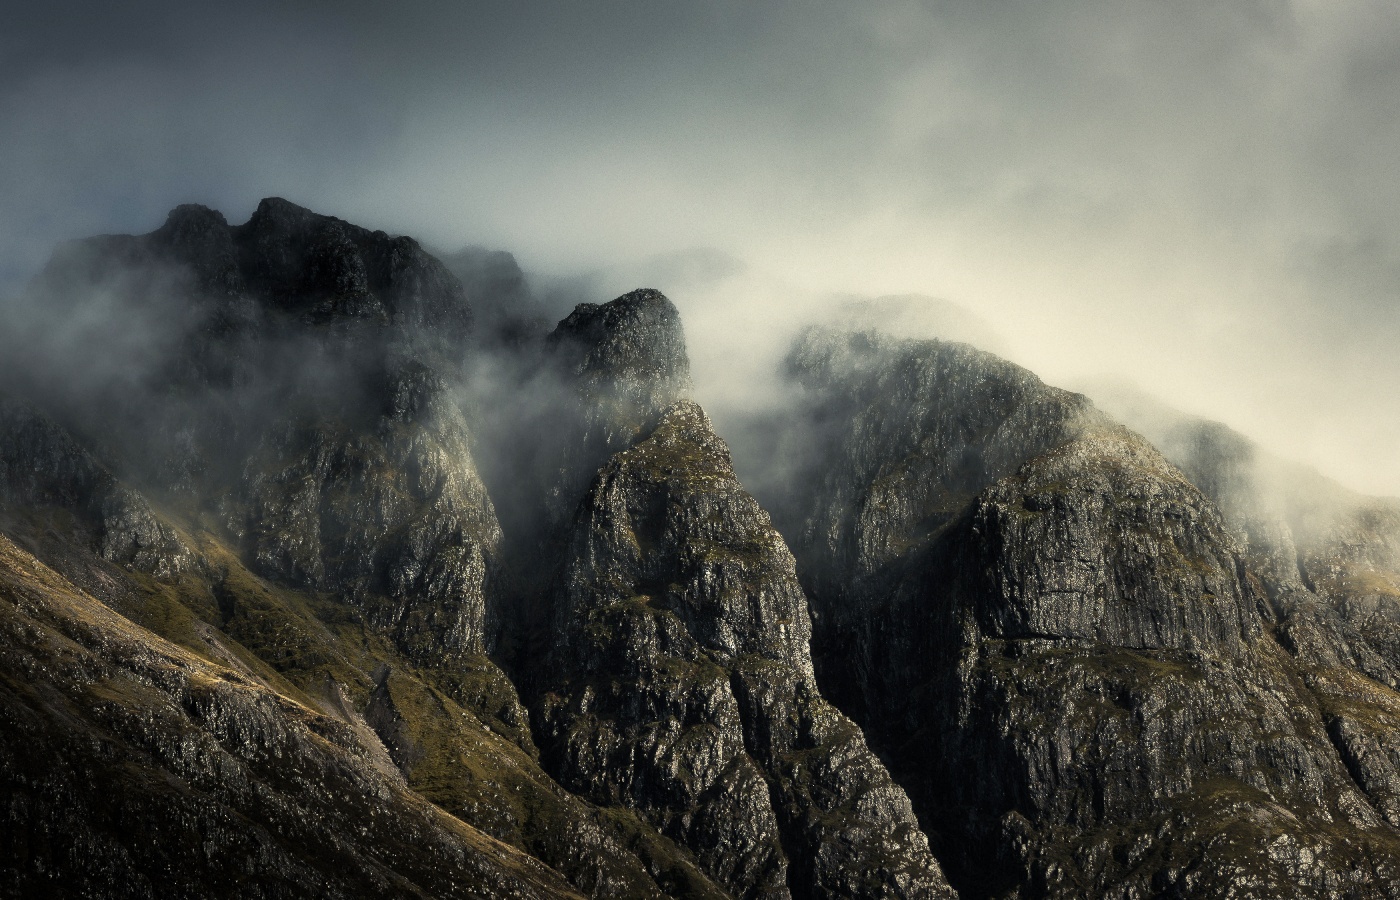 The rugged teacherous mist covered ridges, gullies and peaks of the Aonach Eagach Ridge.